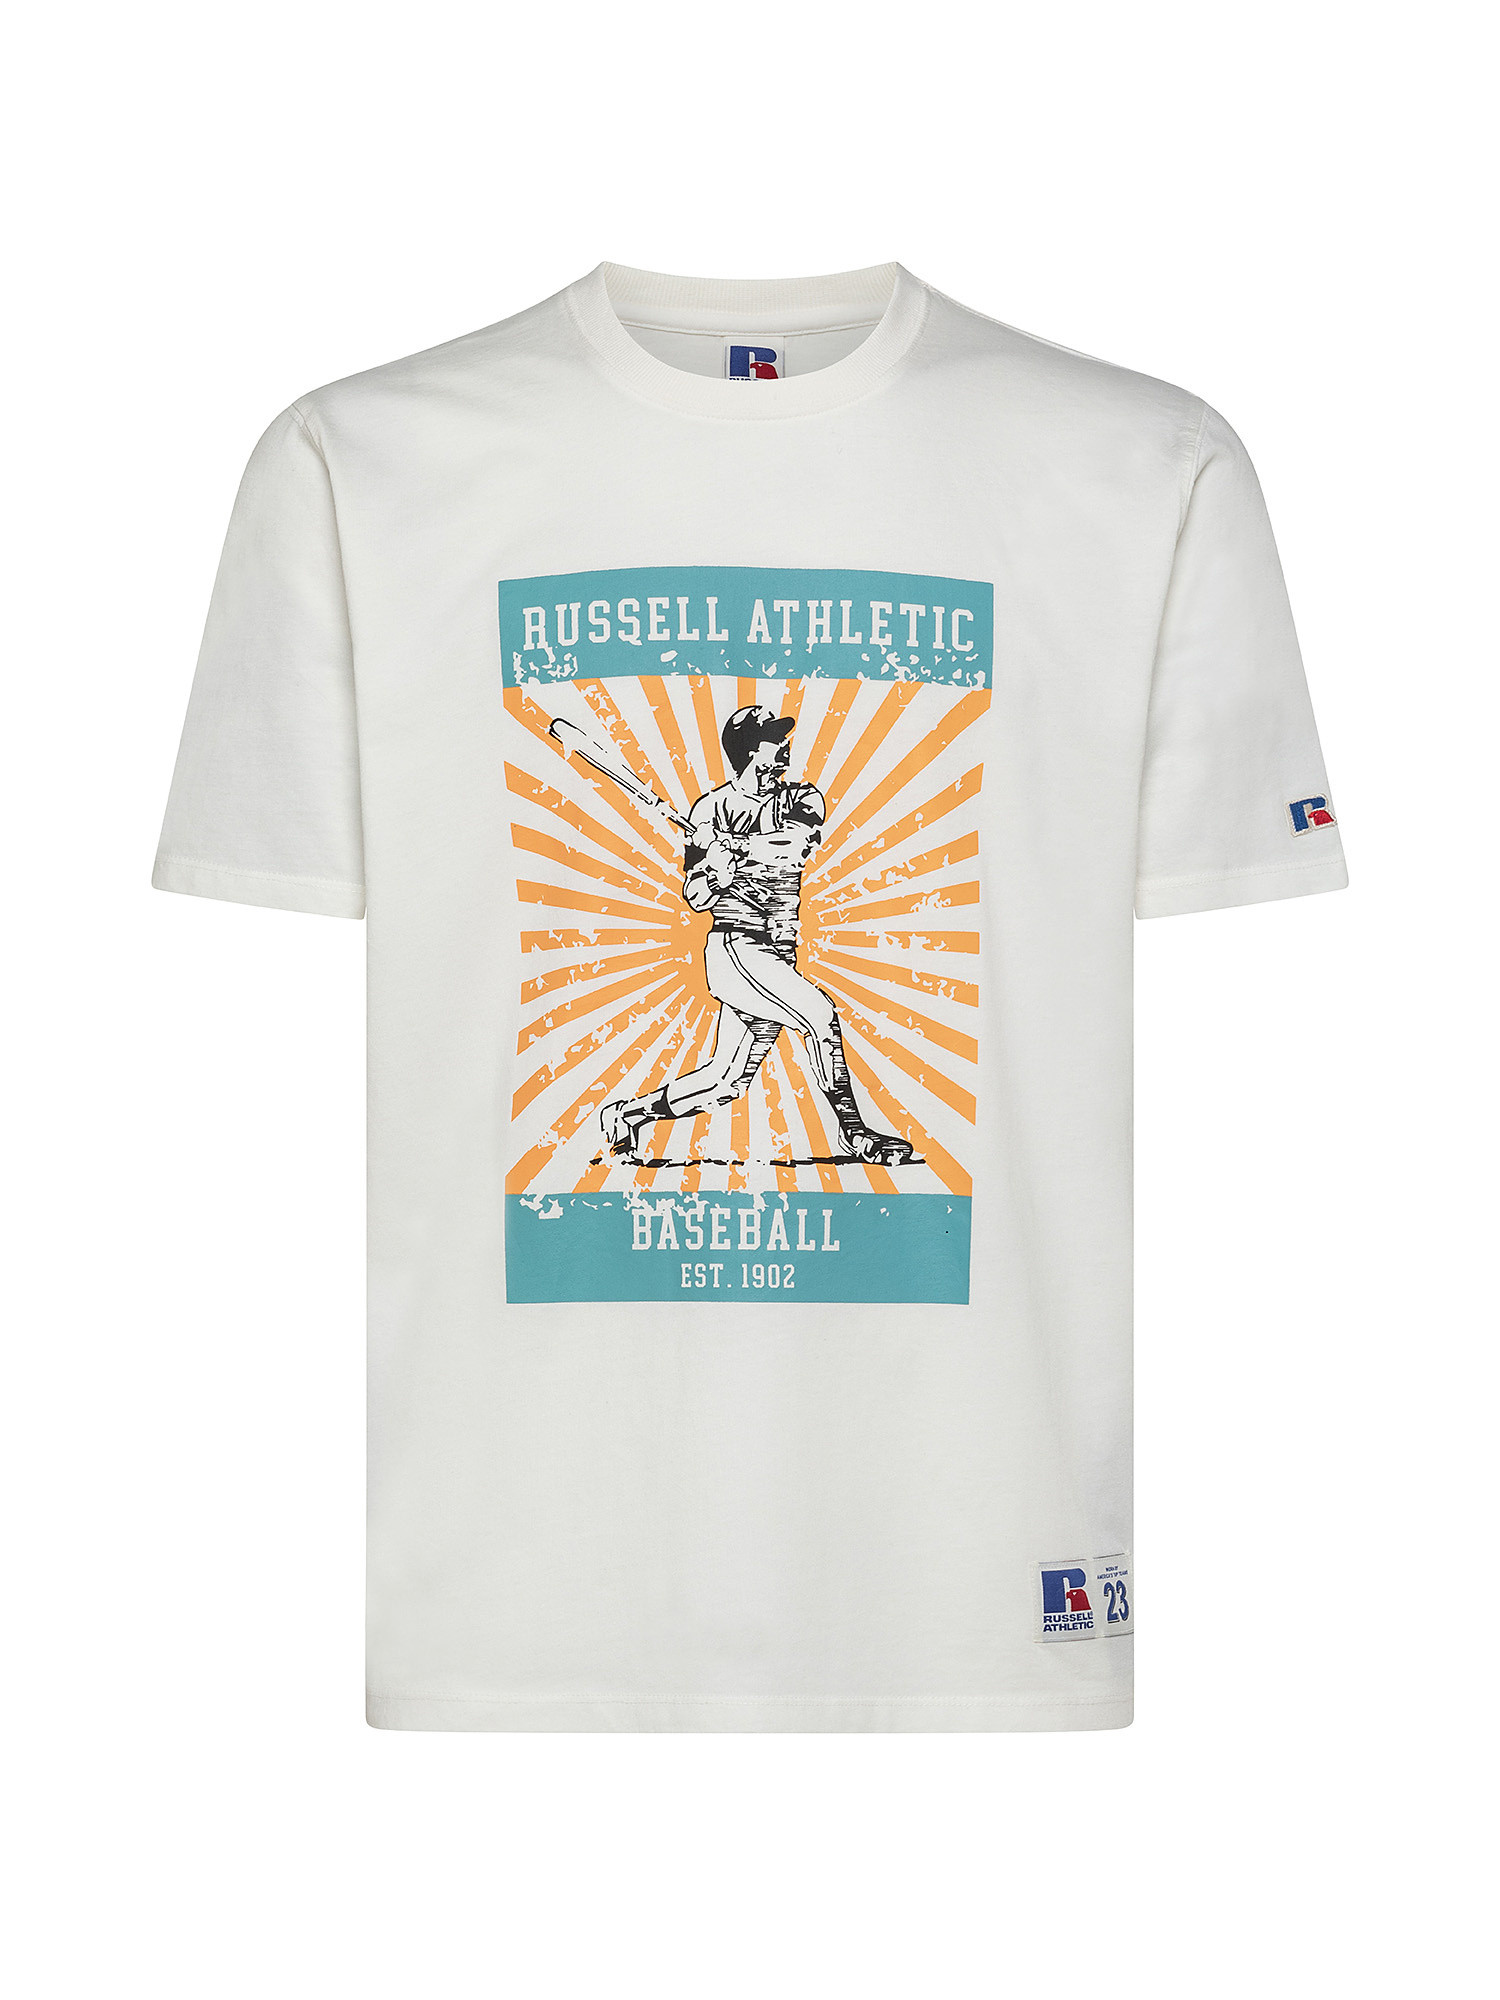 Baseball Ted T-Shirt, White, large image number 0